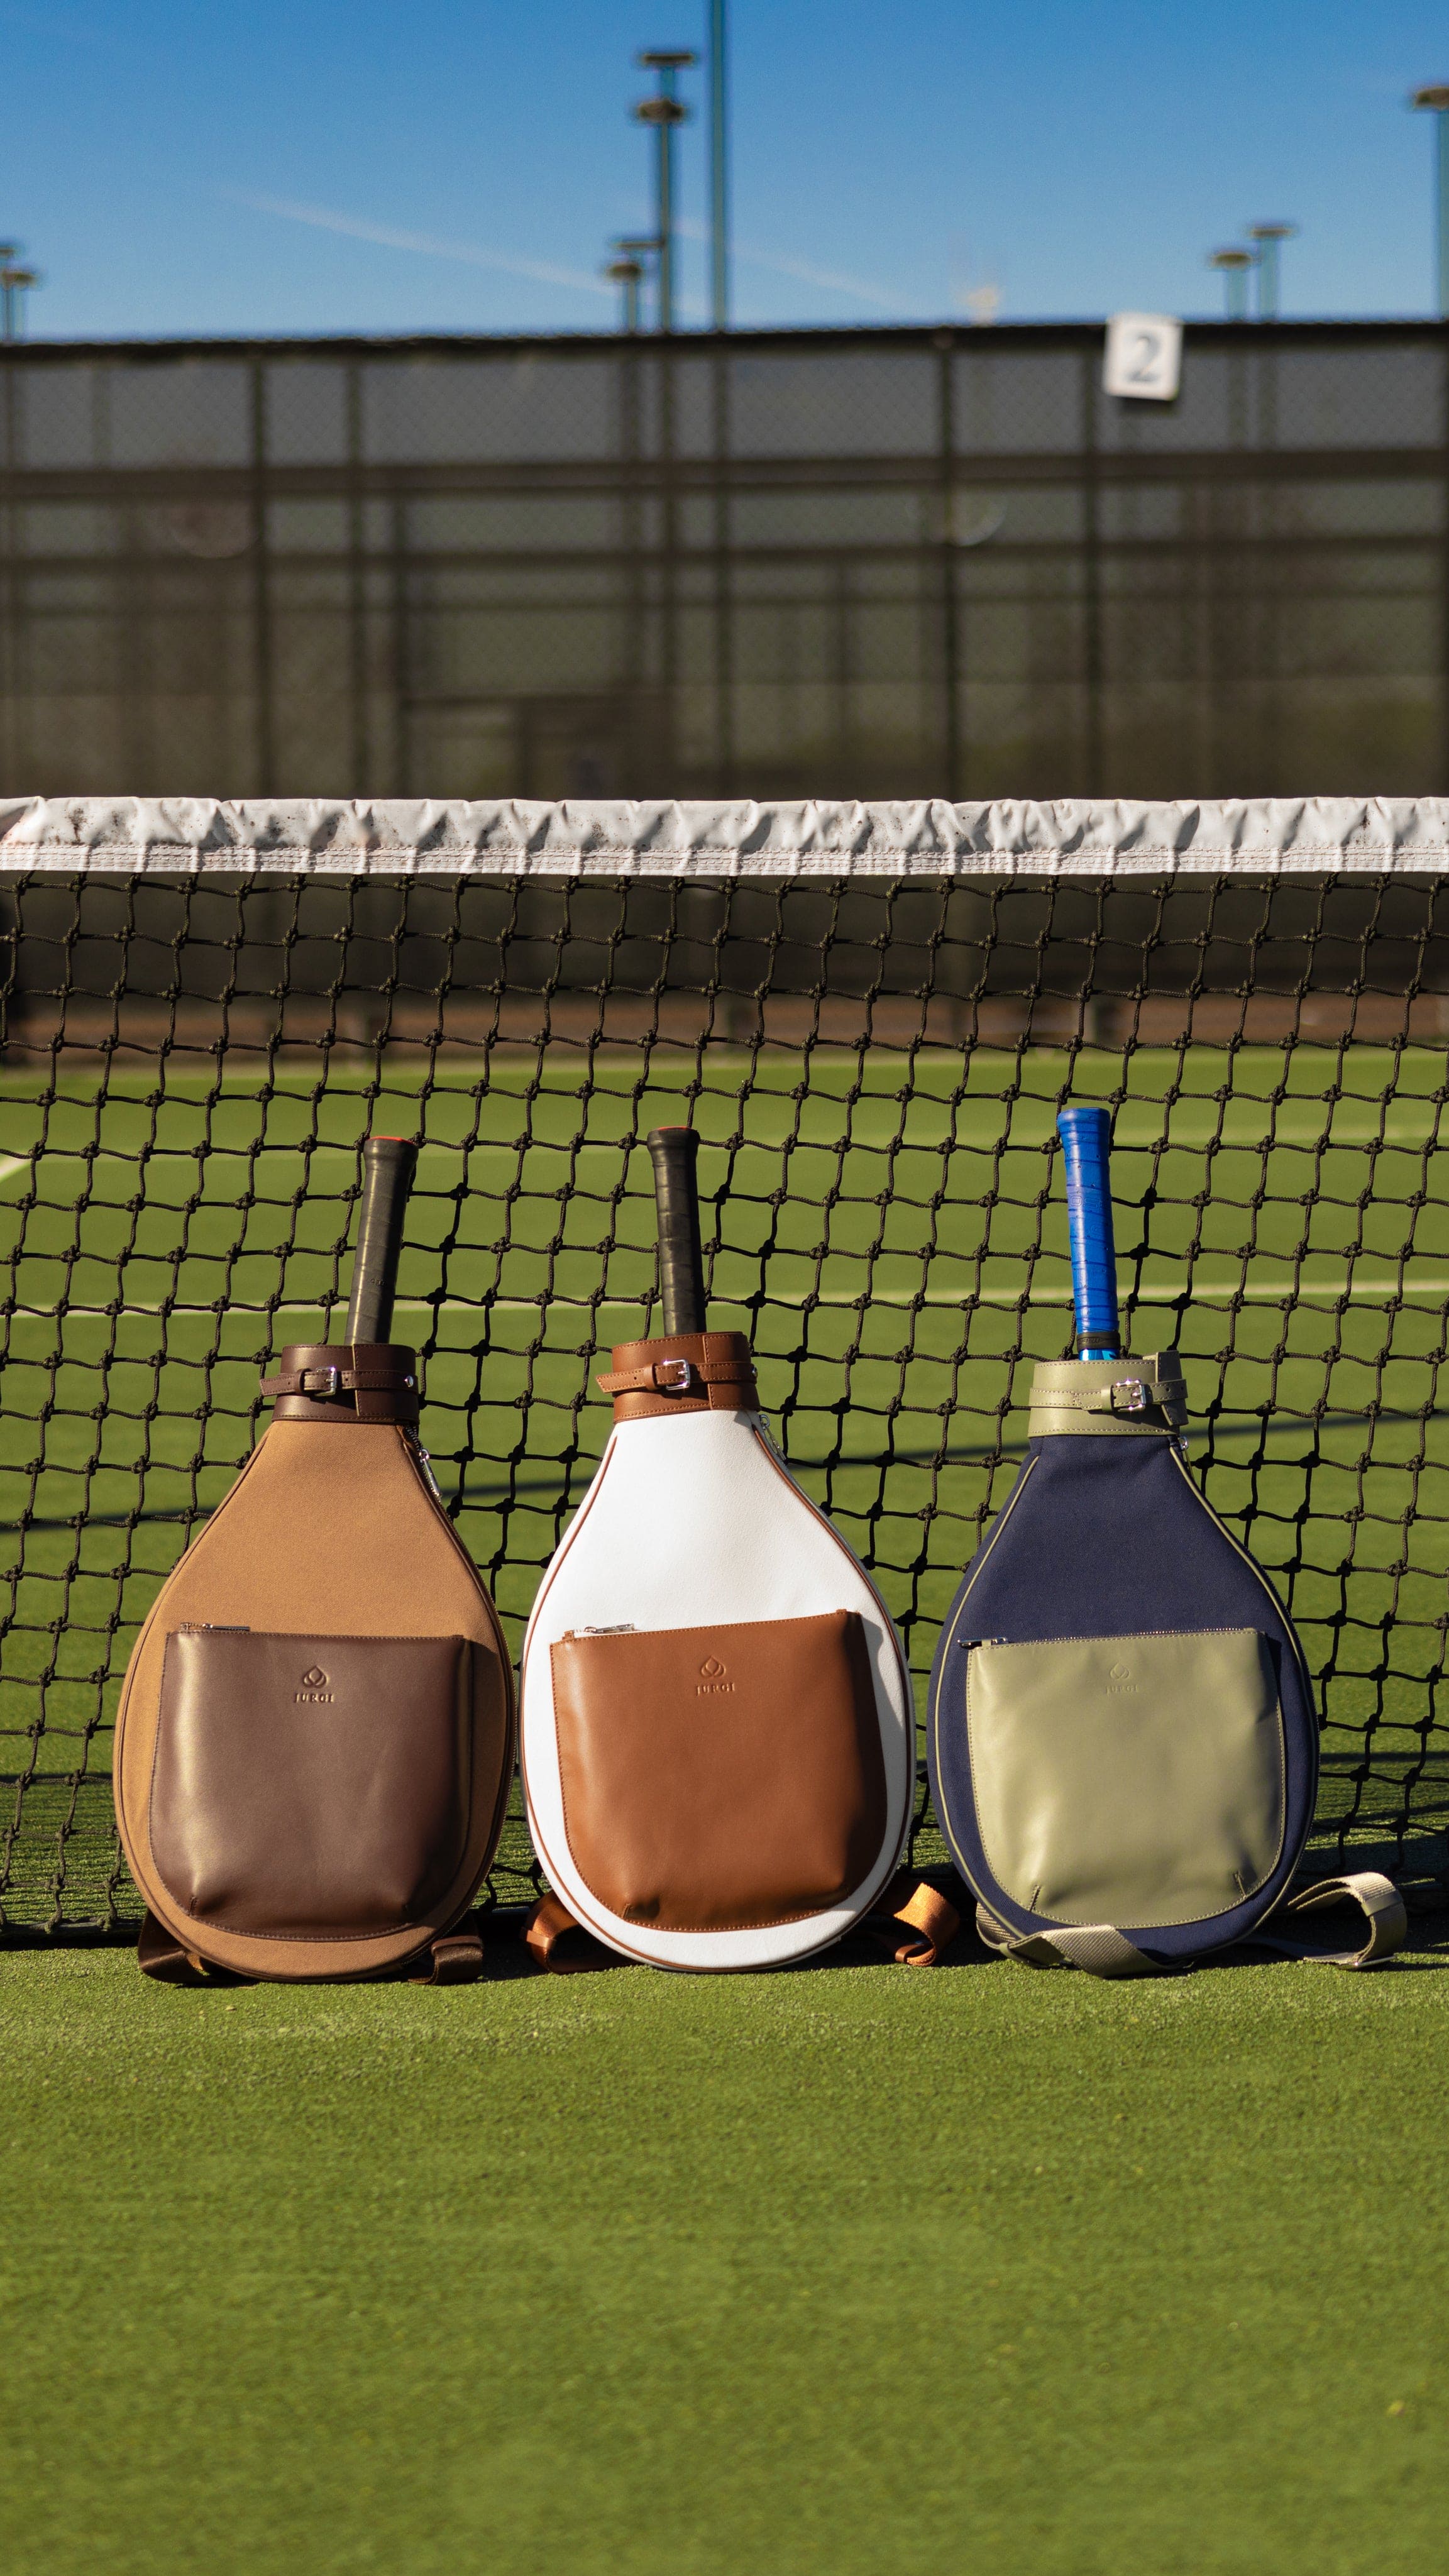 #color_navy-grey-tennis-racket-bag